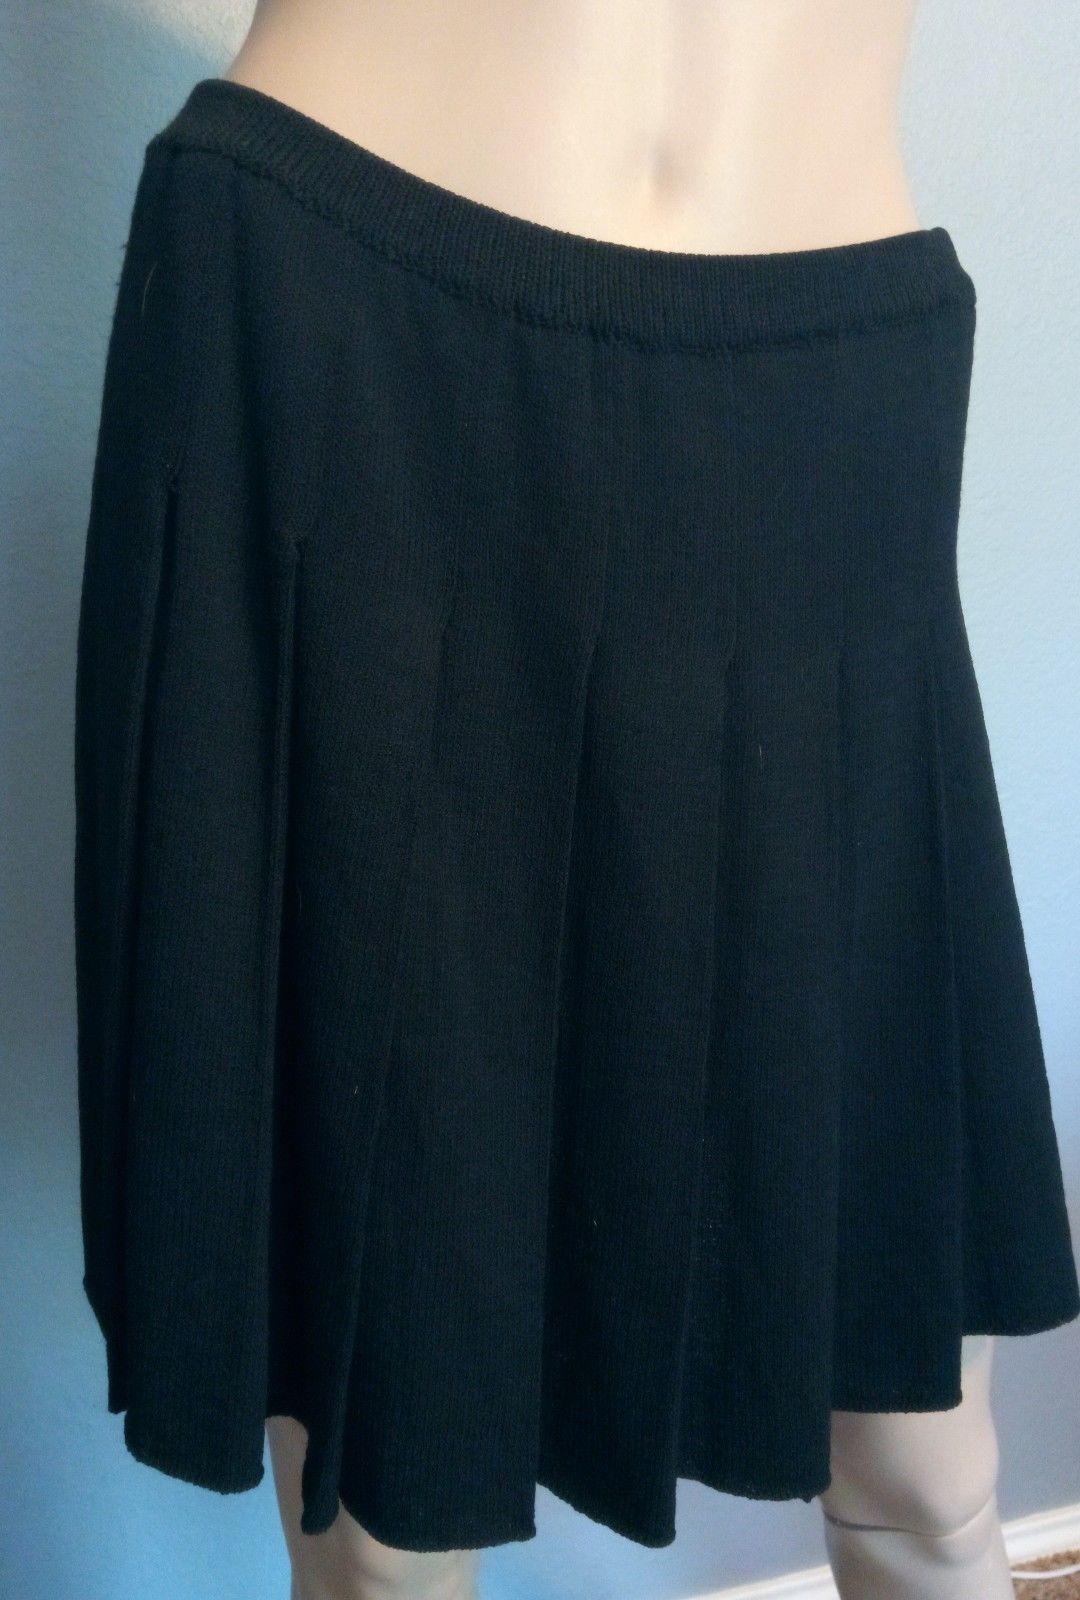 Vtg St. John Separates Black Pleated Santana Knit Mini Skirt S 4 - Skirts